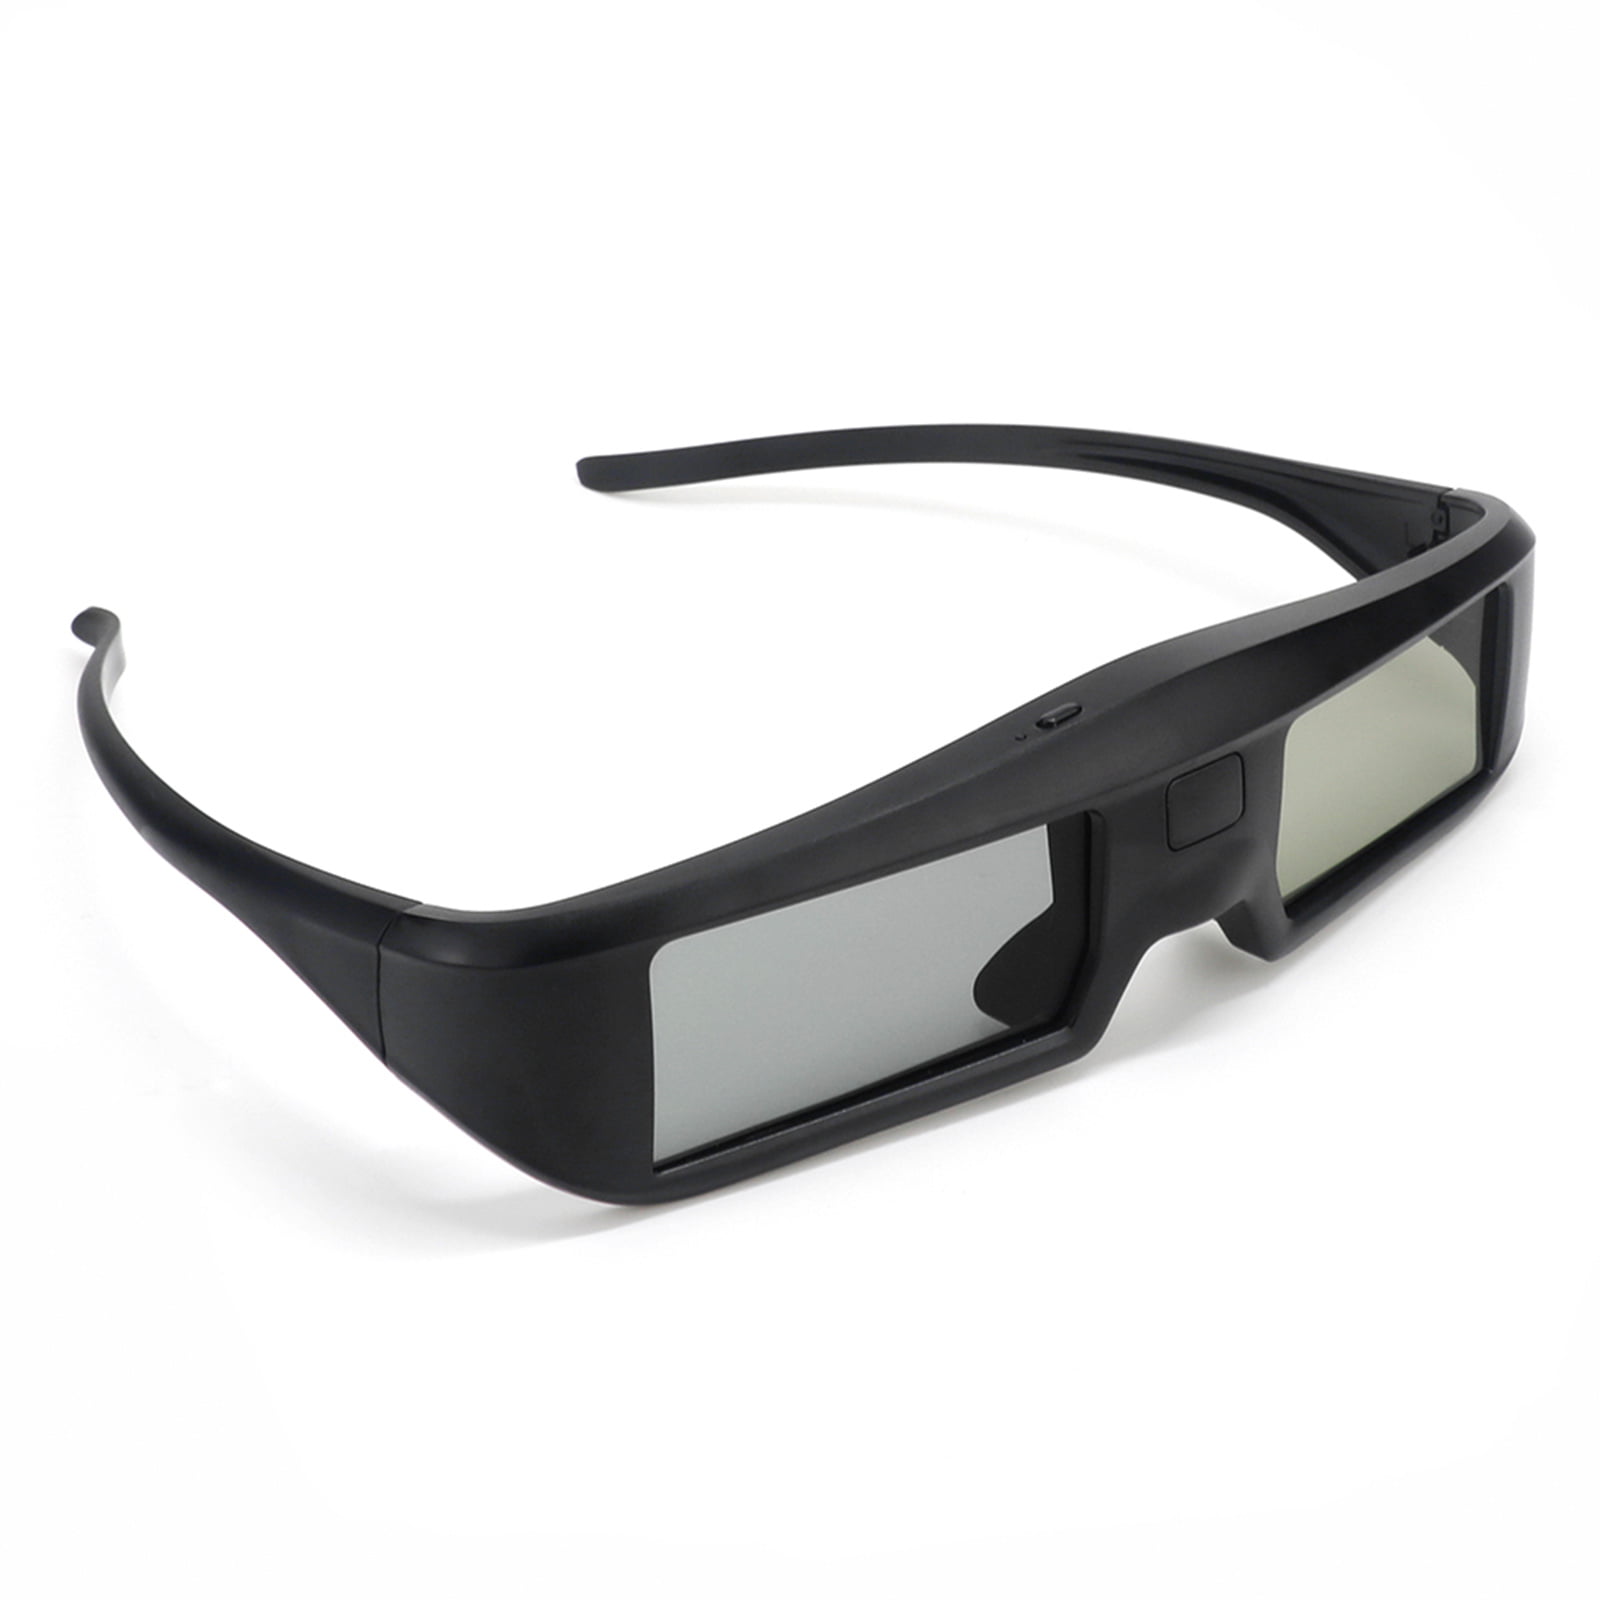 Docooler G06-BT 3D Active Shutter Glasses Virtual Reality Glasses Bluetooth Signal for 3D HDTV 